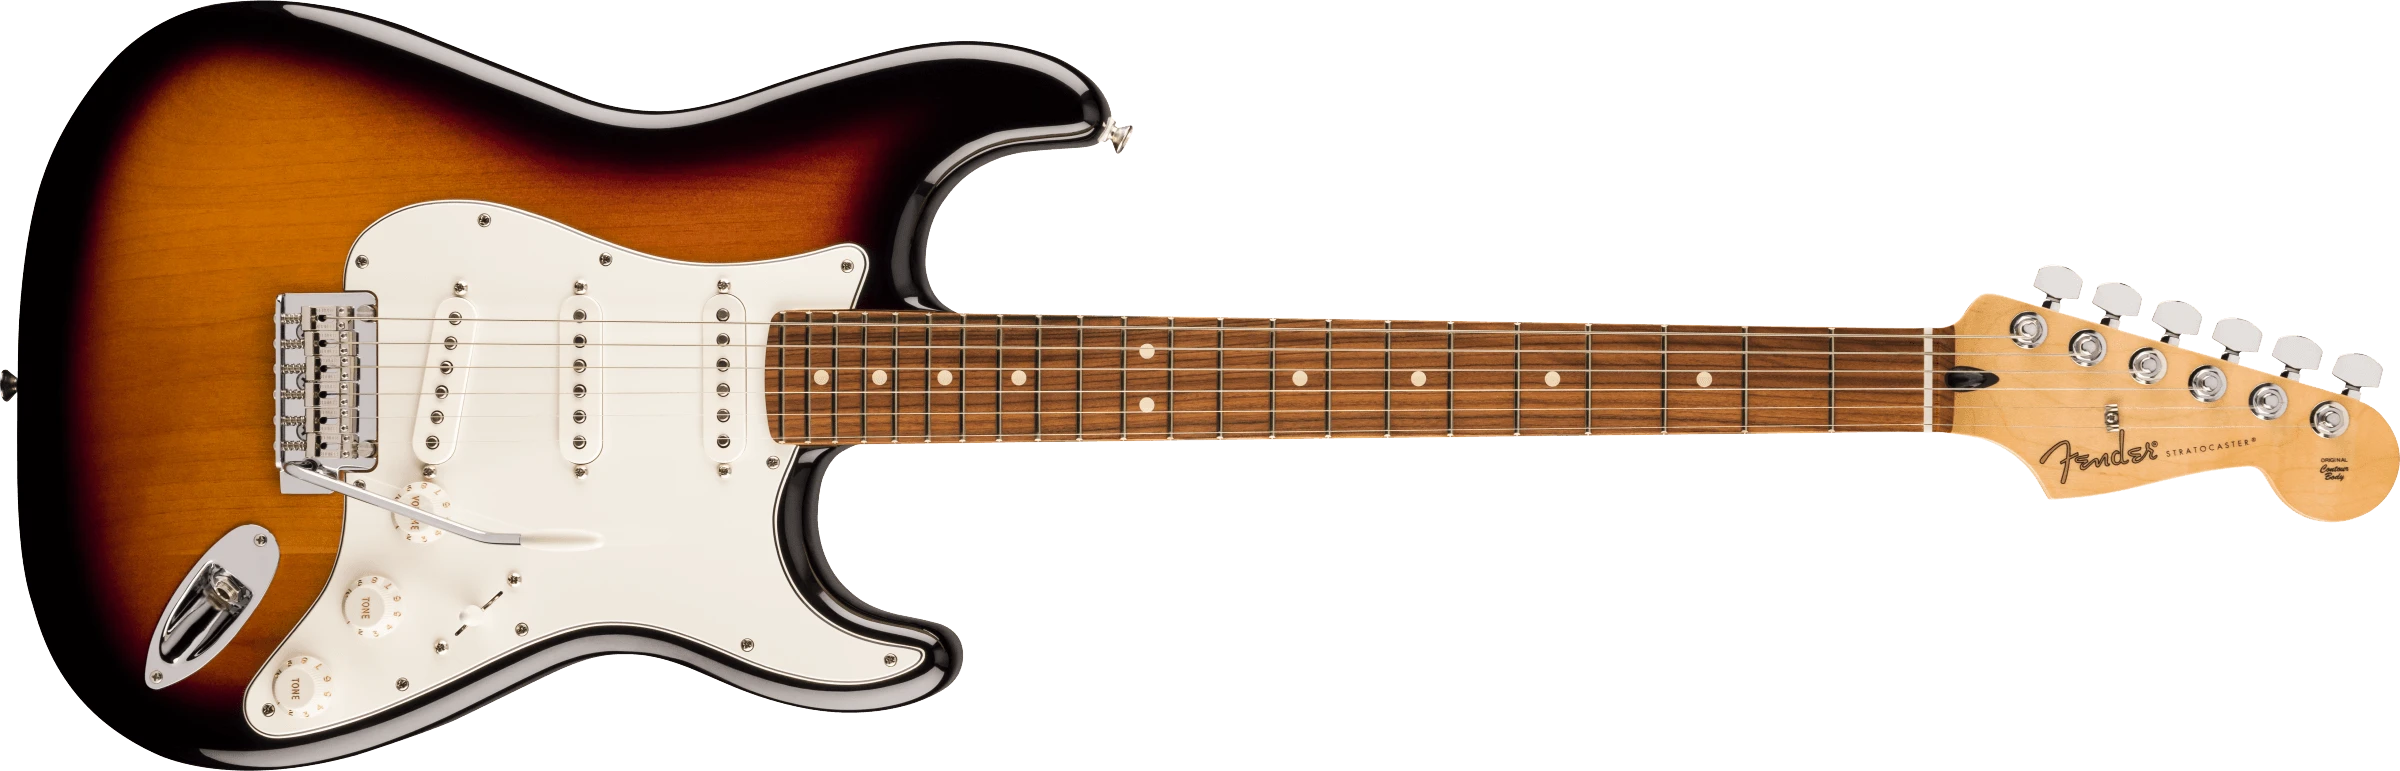 Fender Strat Player 2ts/pf 70th Anniversary